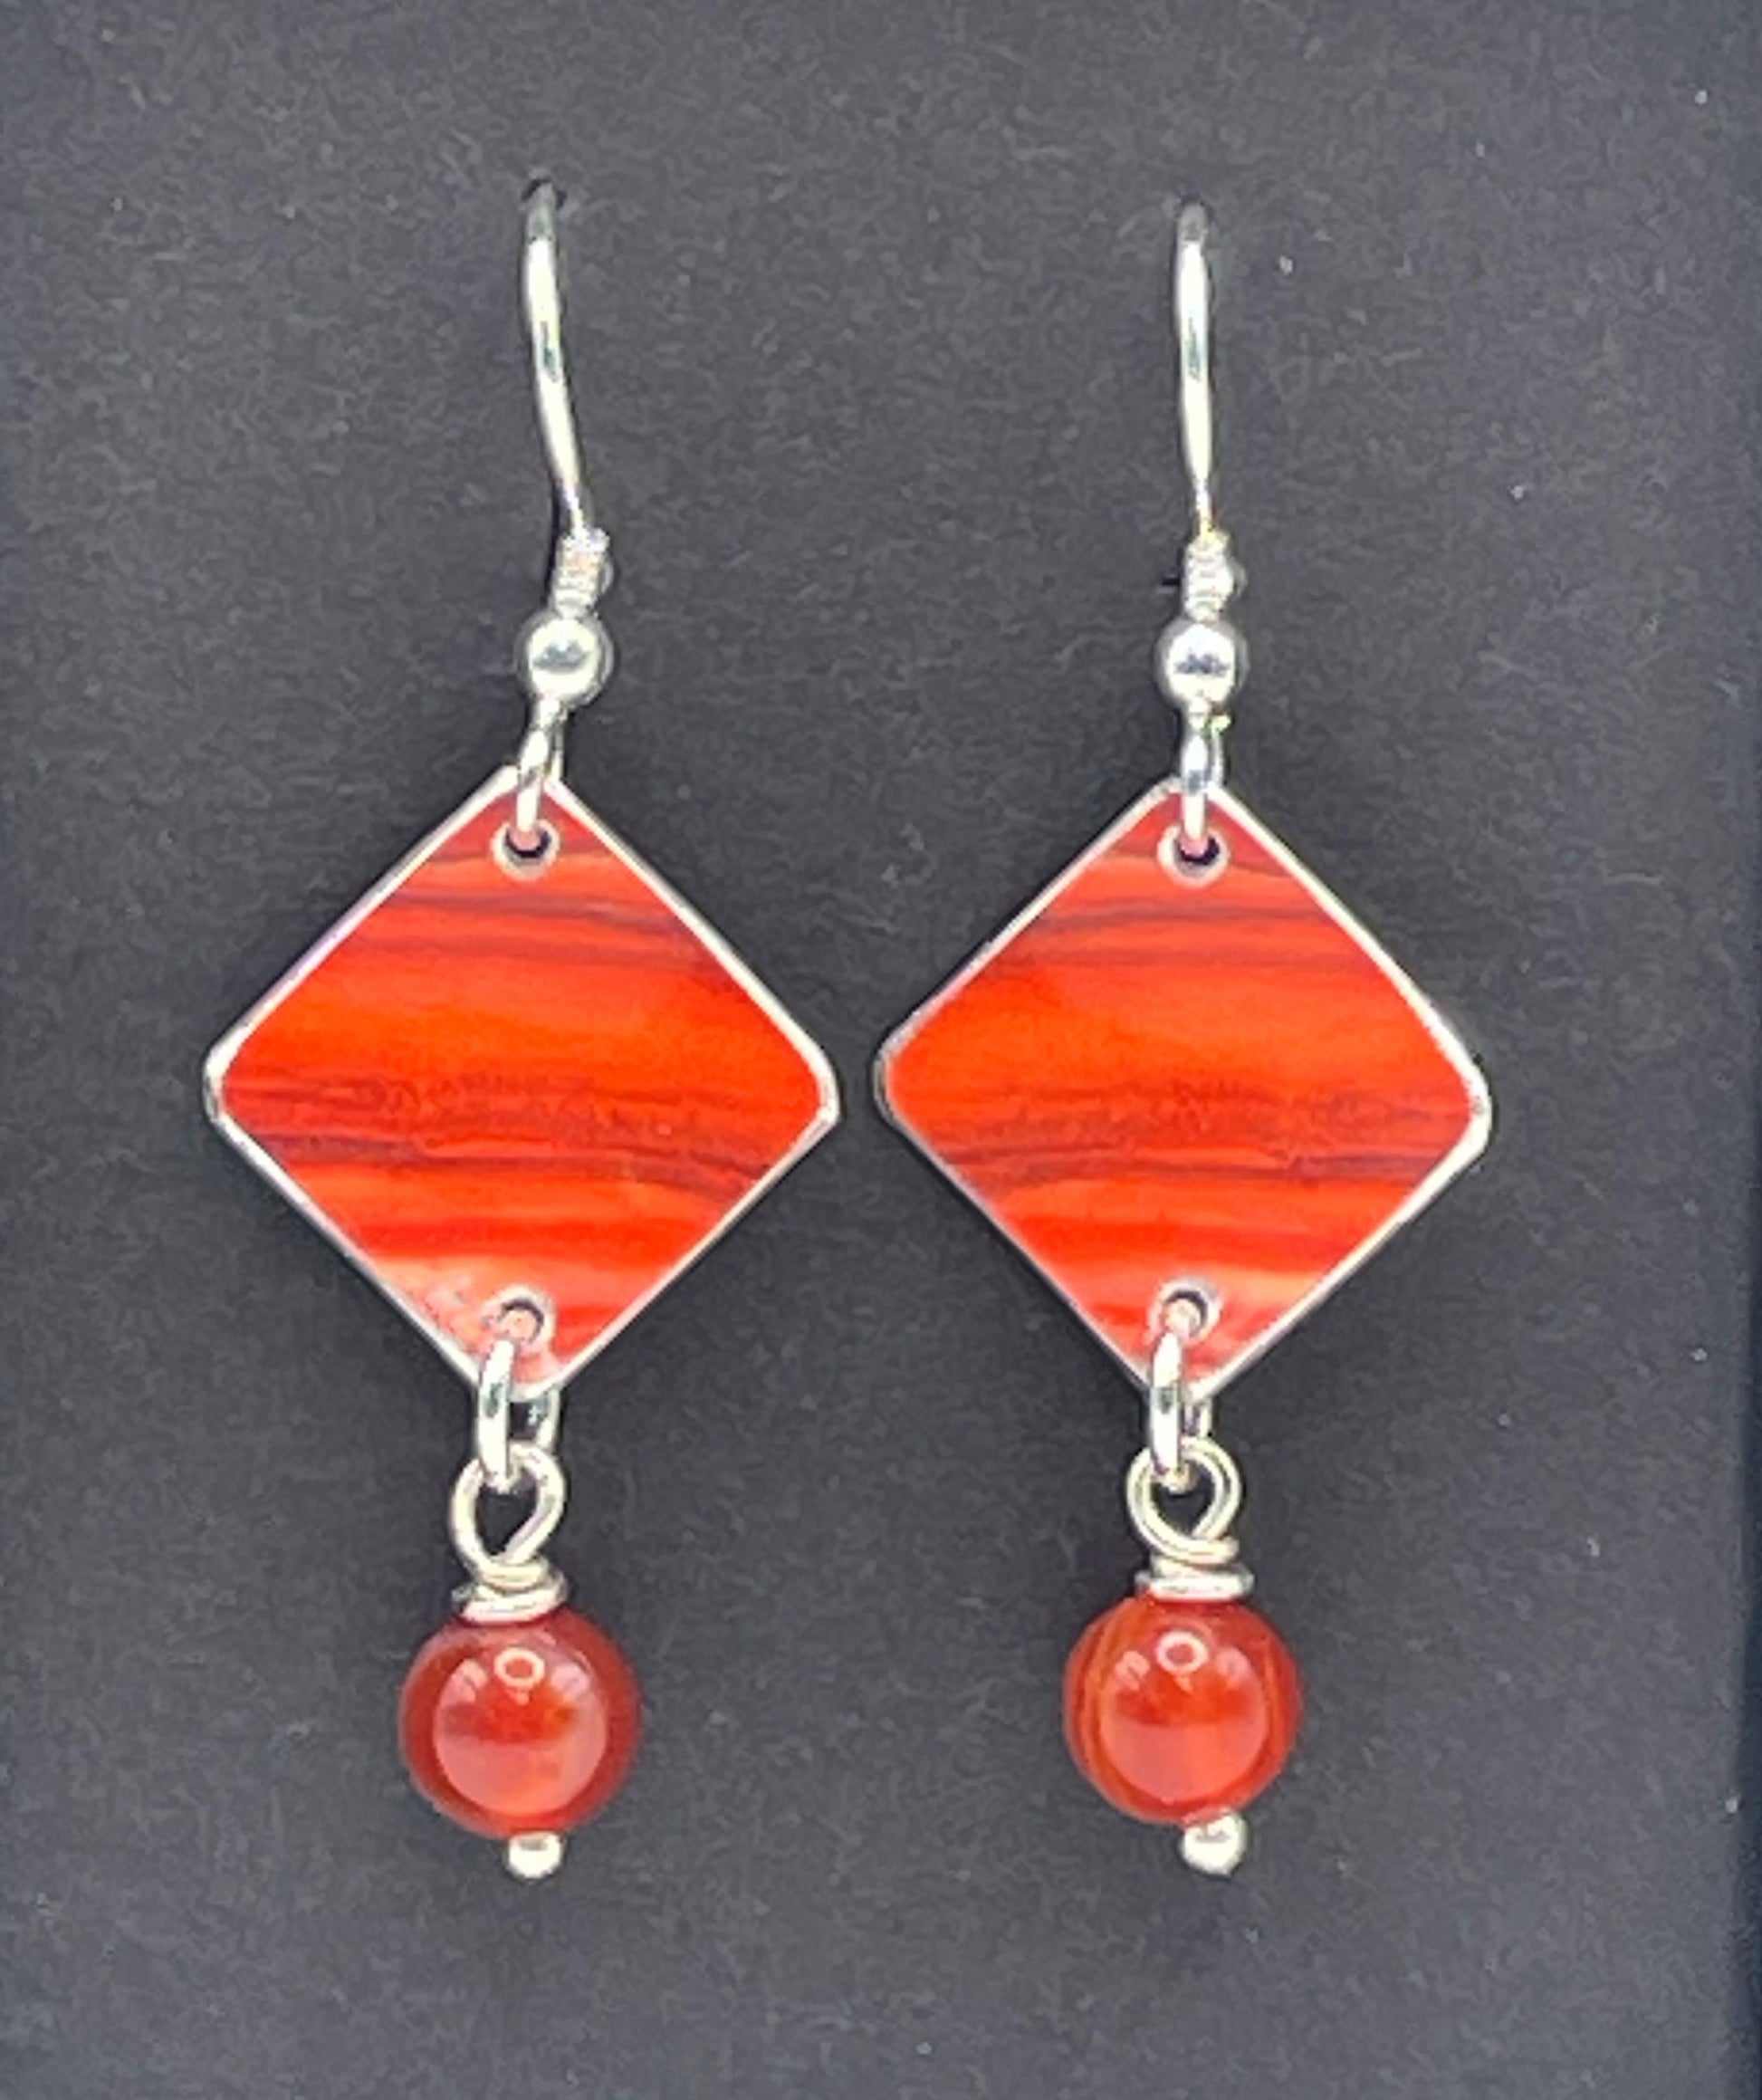 Beach Earrings - Seaside Jewellery - Coastal - Beach earrings - Abstract Earrings - Drop Earrings - Funky Earrings - Vibrant Earrings